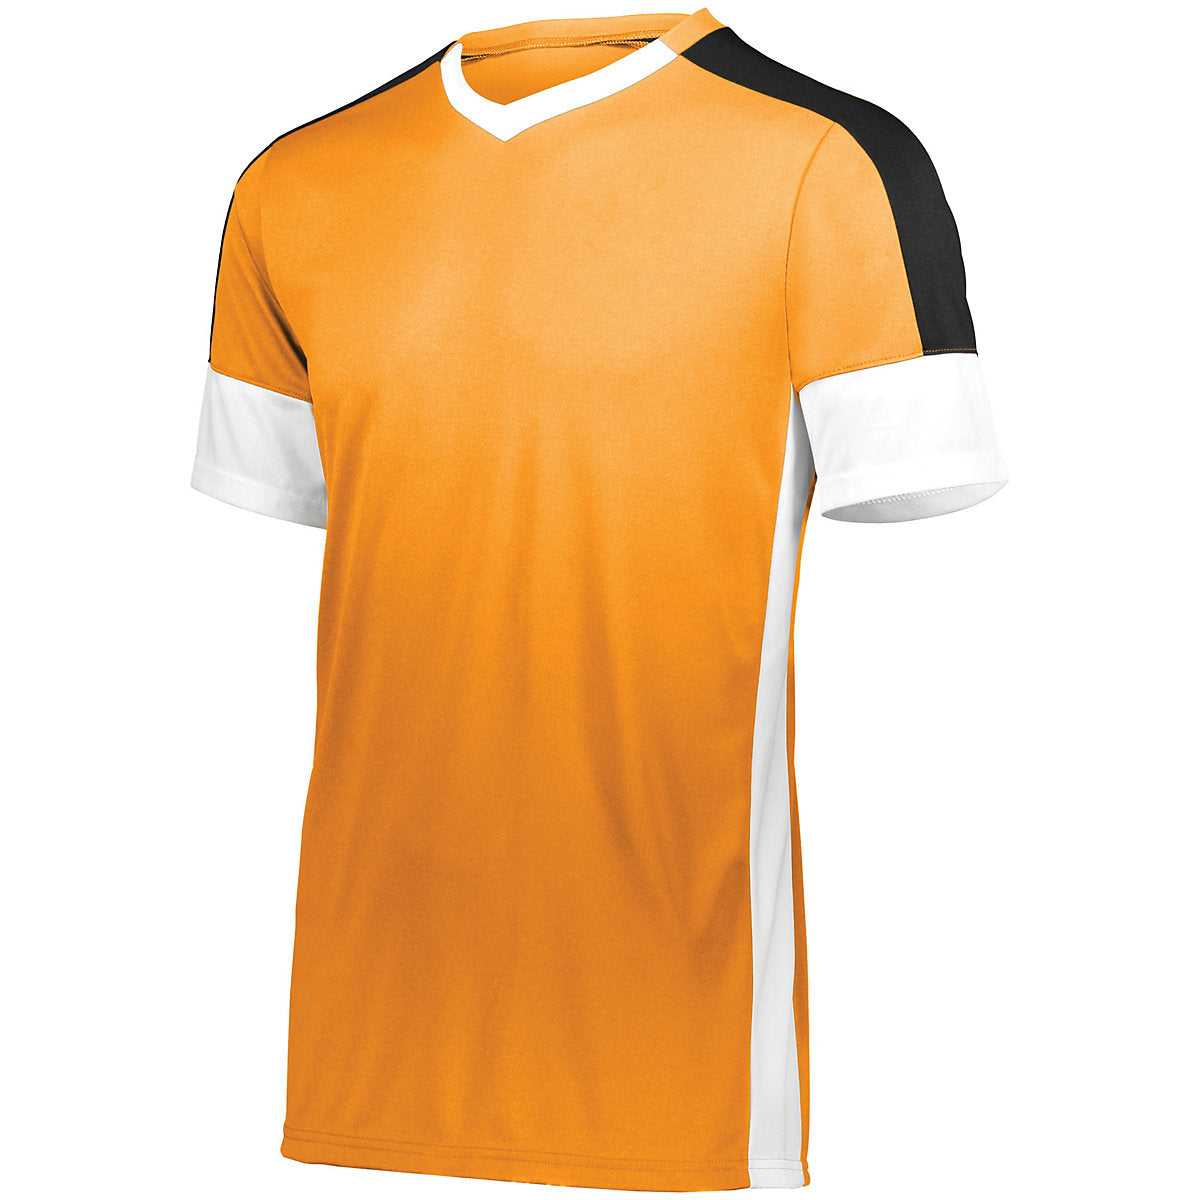 High Five 322930 Wembley Soccer Jersey - Power Orange White Black - HIT a Double